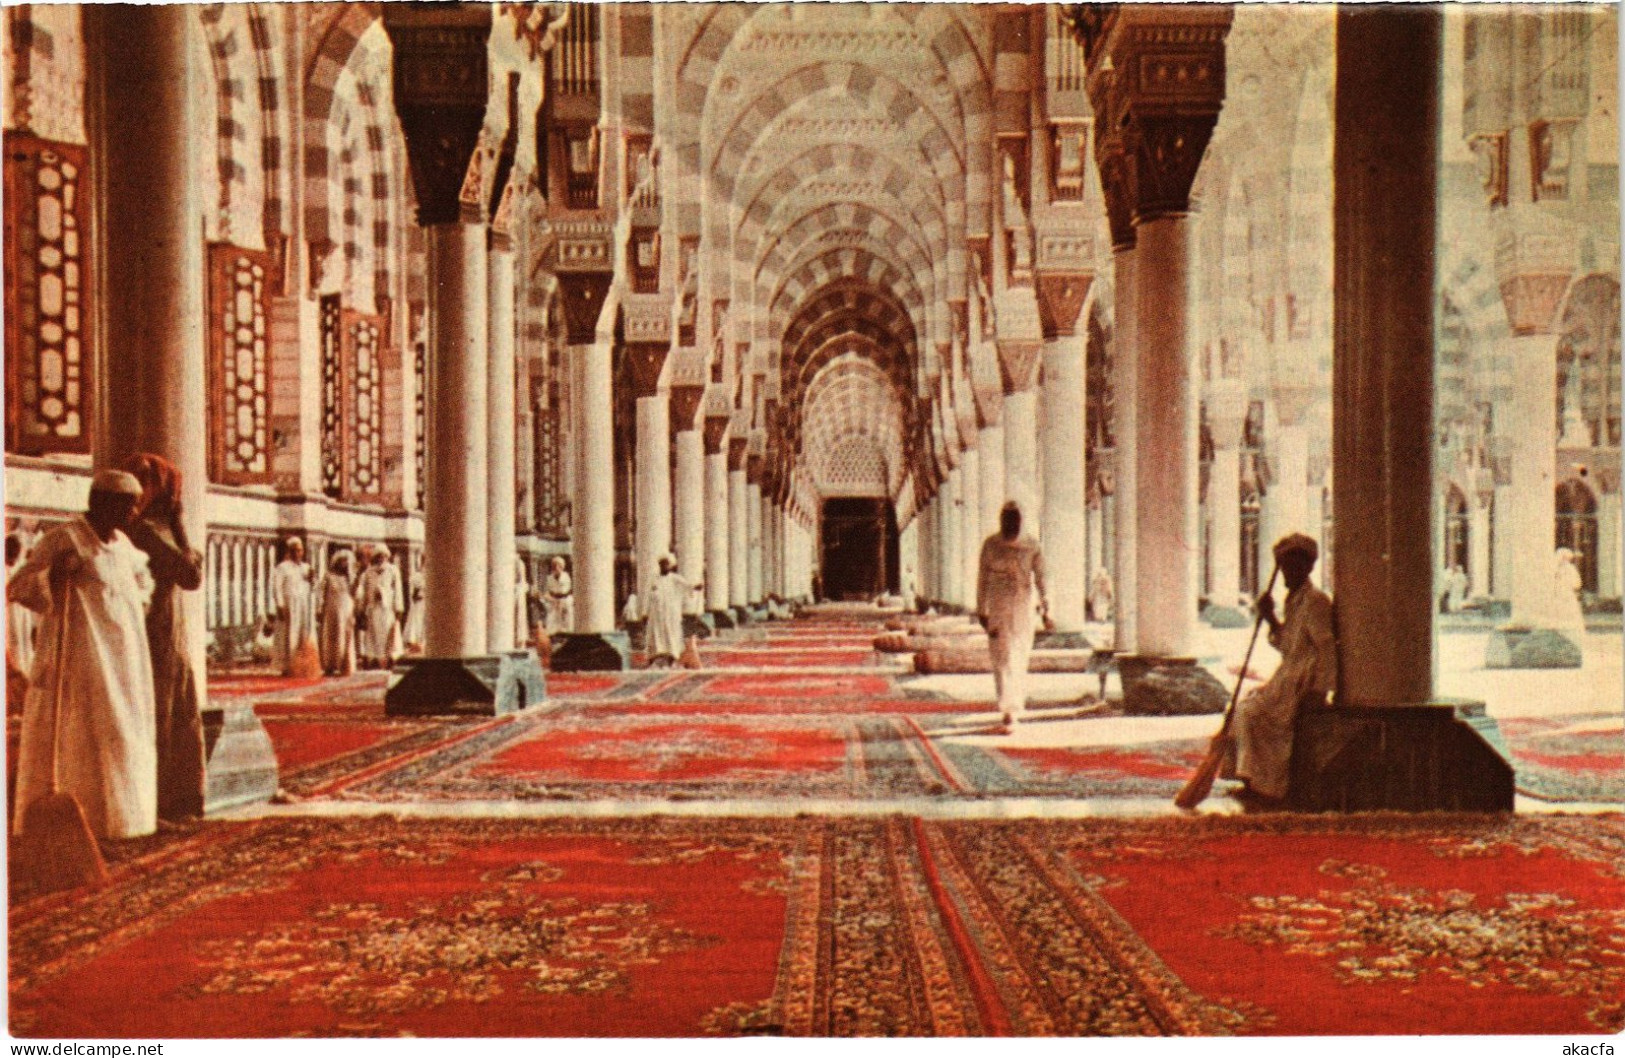 CPM Medina Prophet's Holy Mosque SAUDI ARABIA (1182970) - Saoedi-Arabië